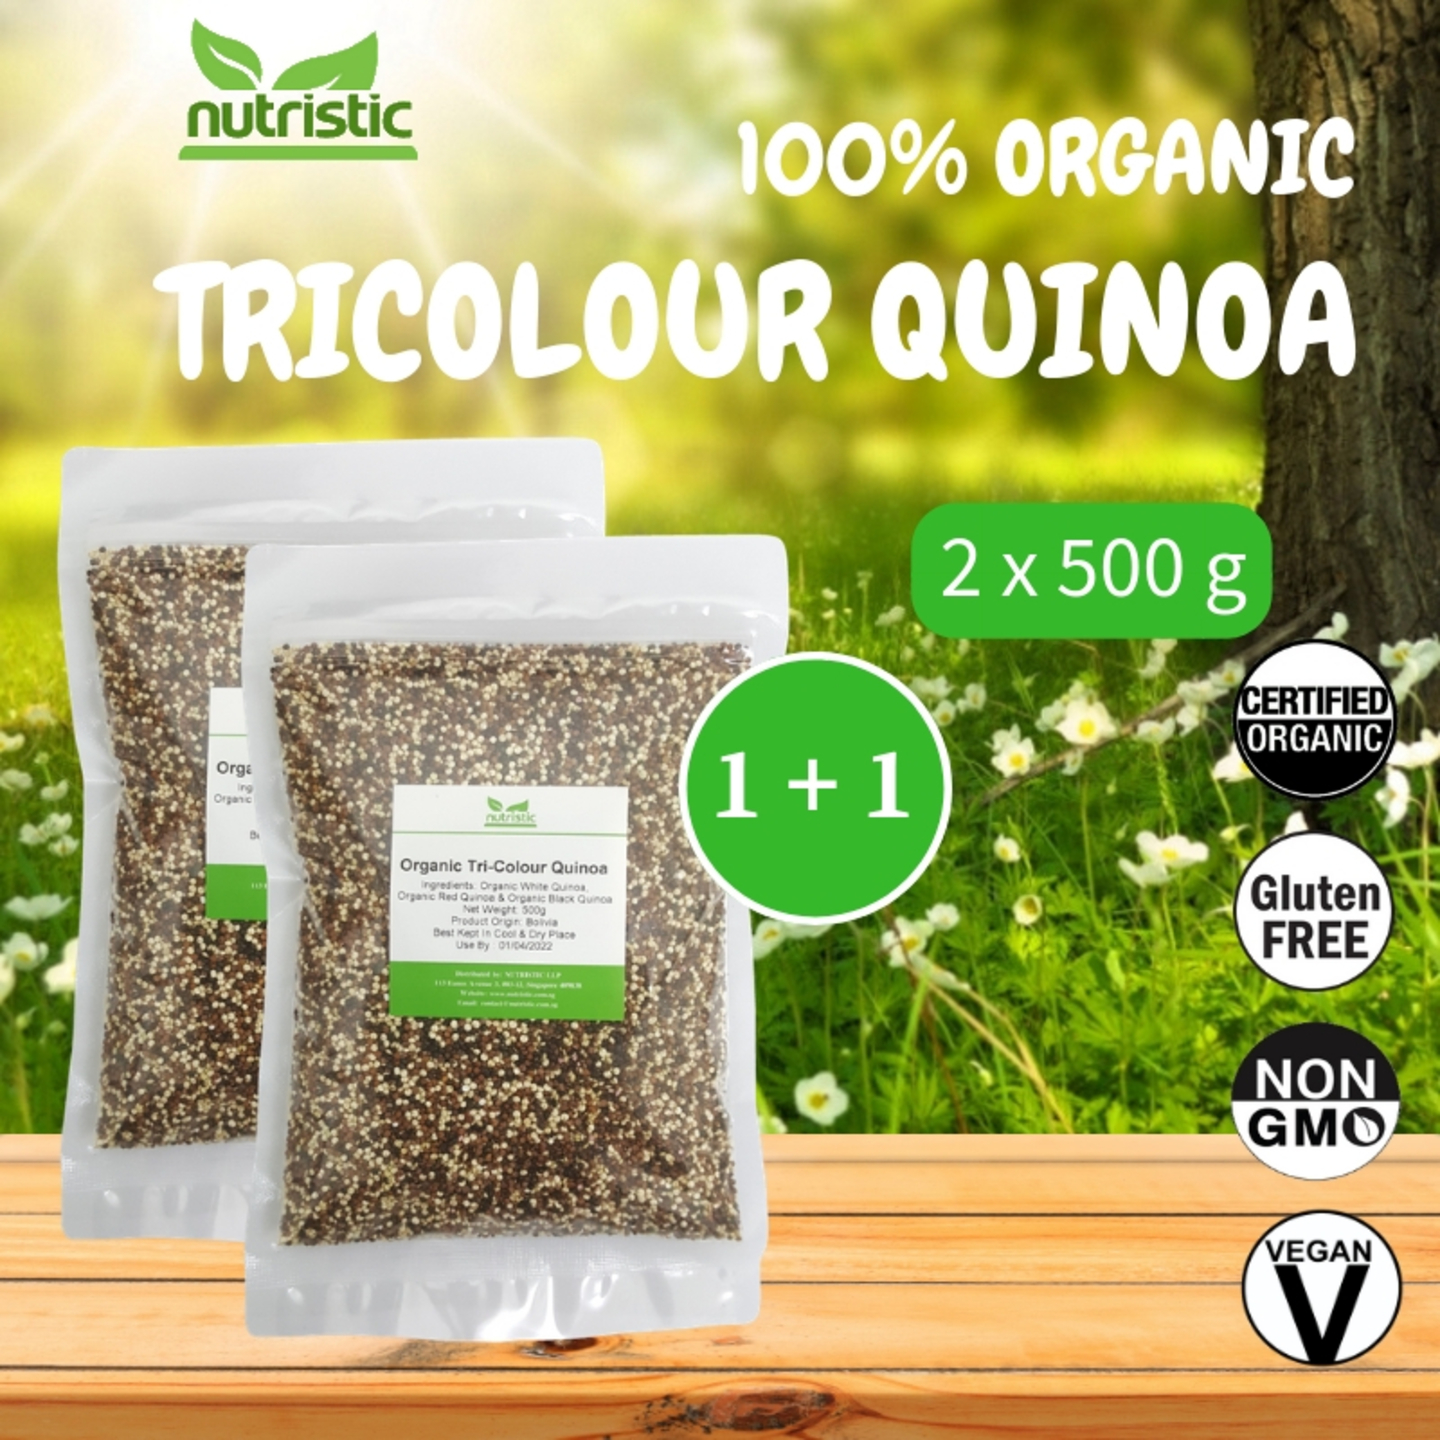 Organic Tricolour Quinoa 500g x2 - Value Bundle 1+1